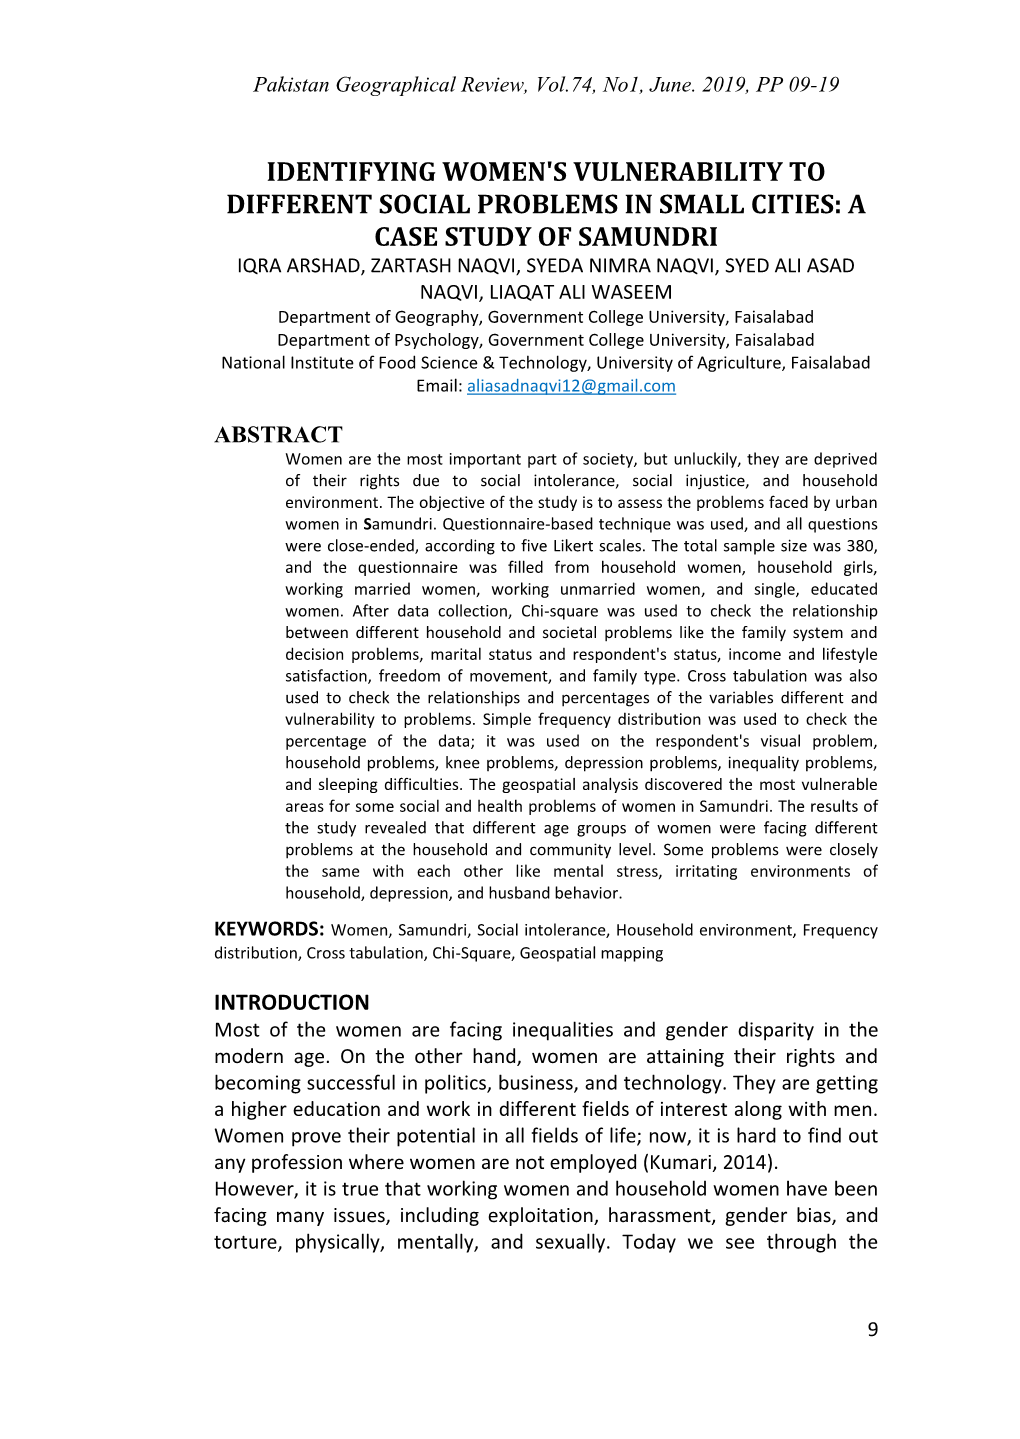 A Case Study of Samundri